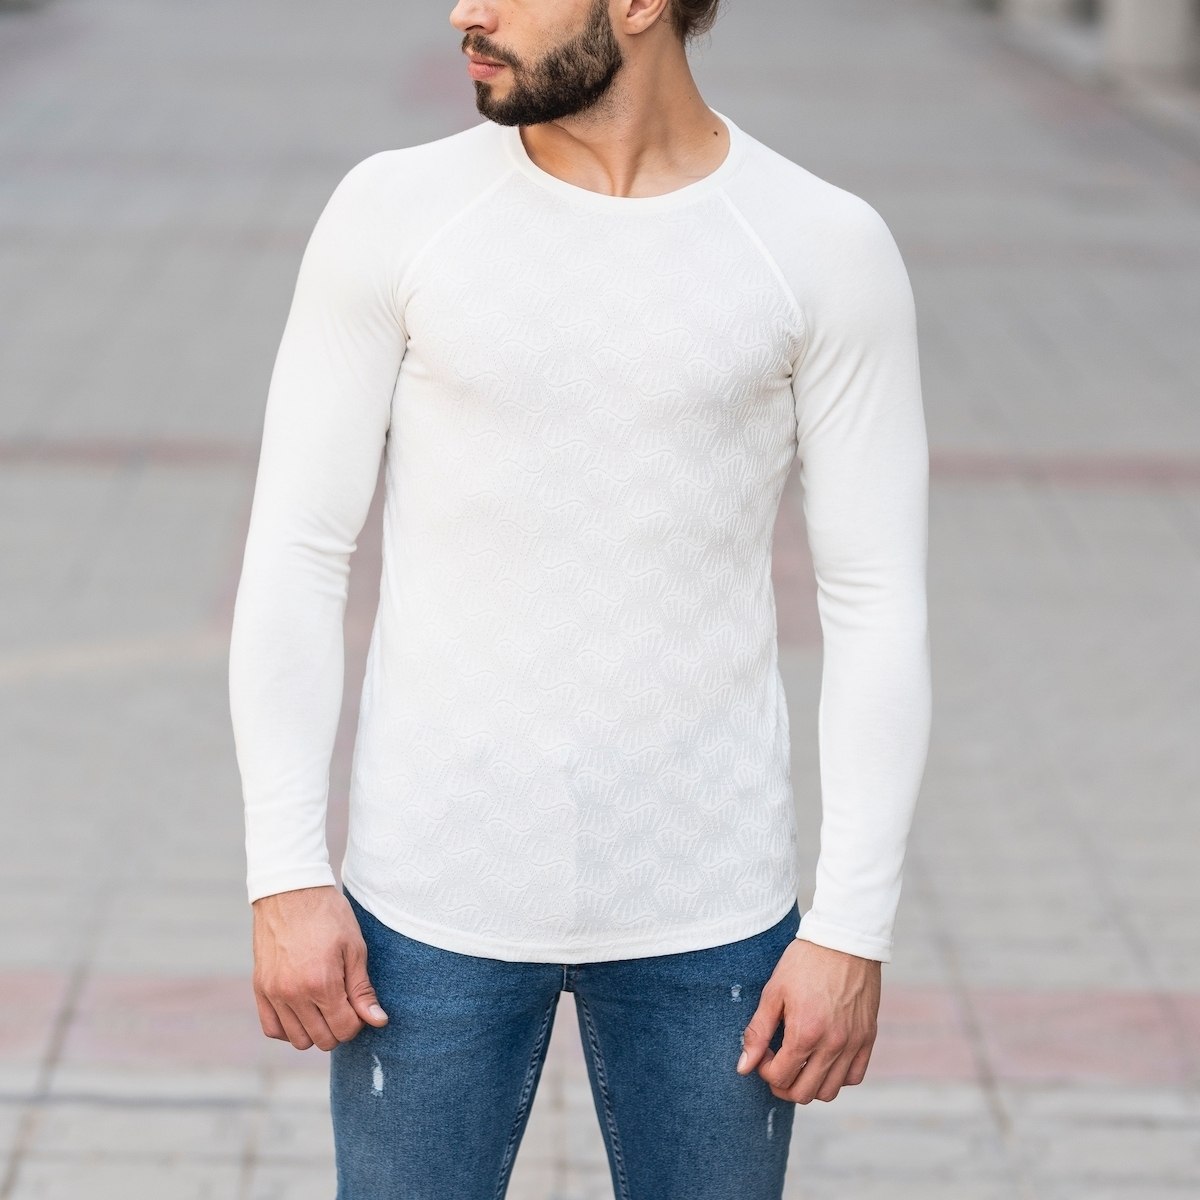 Engraved Sweatshirt In White - 1